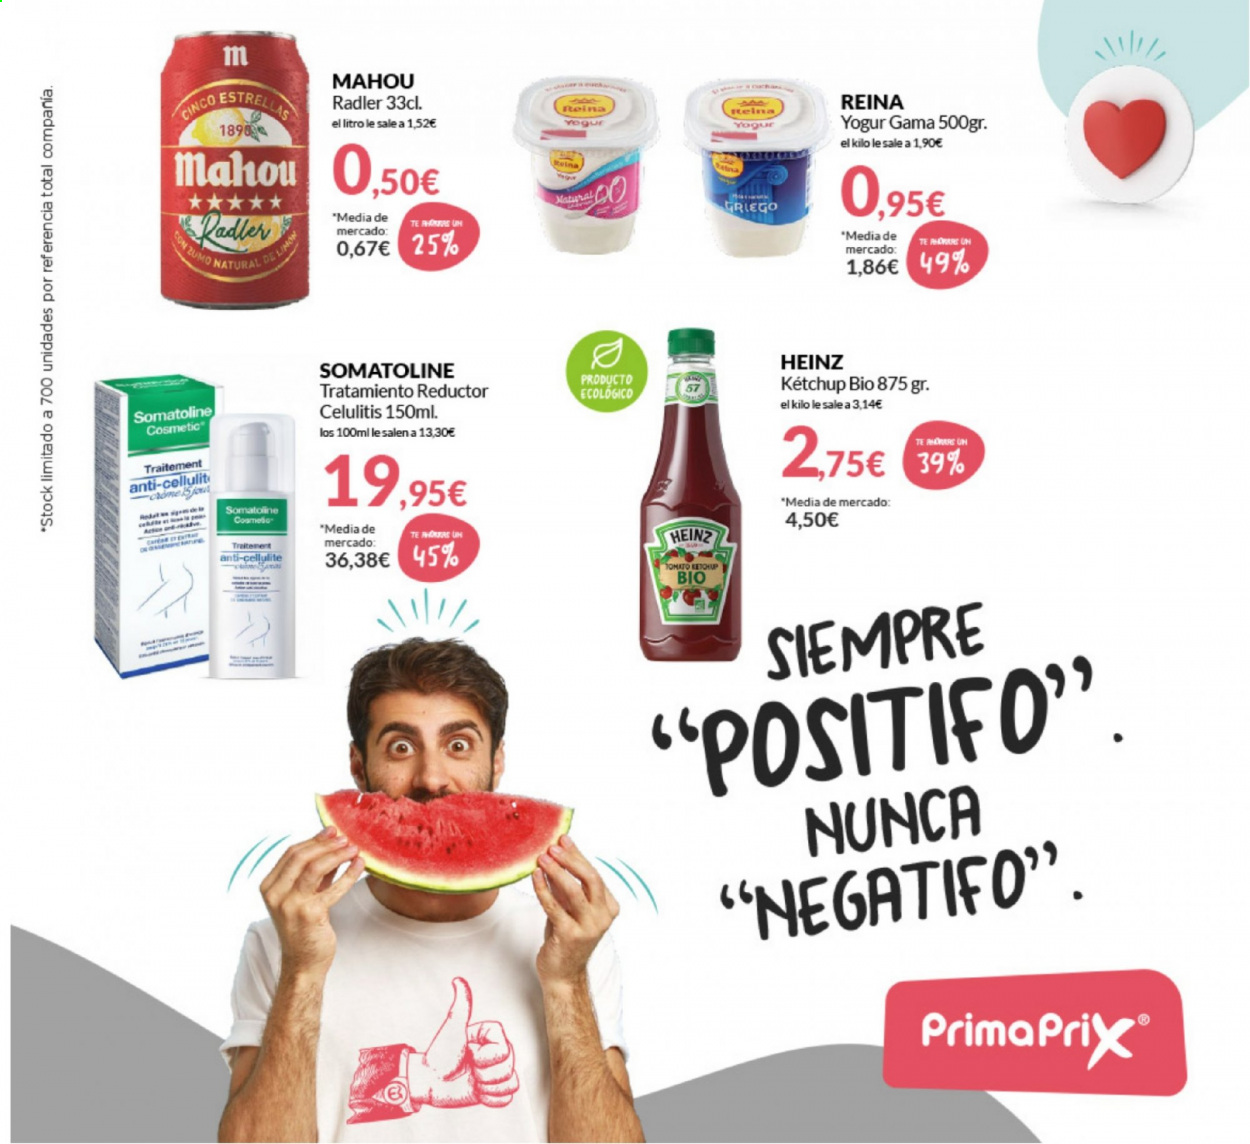 thumbnail - Folleto actual PrimaPrix - Ventas - Mahou, yogur, Heinz. Página 1.